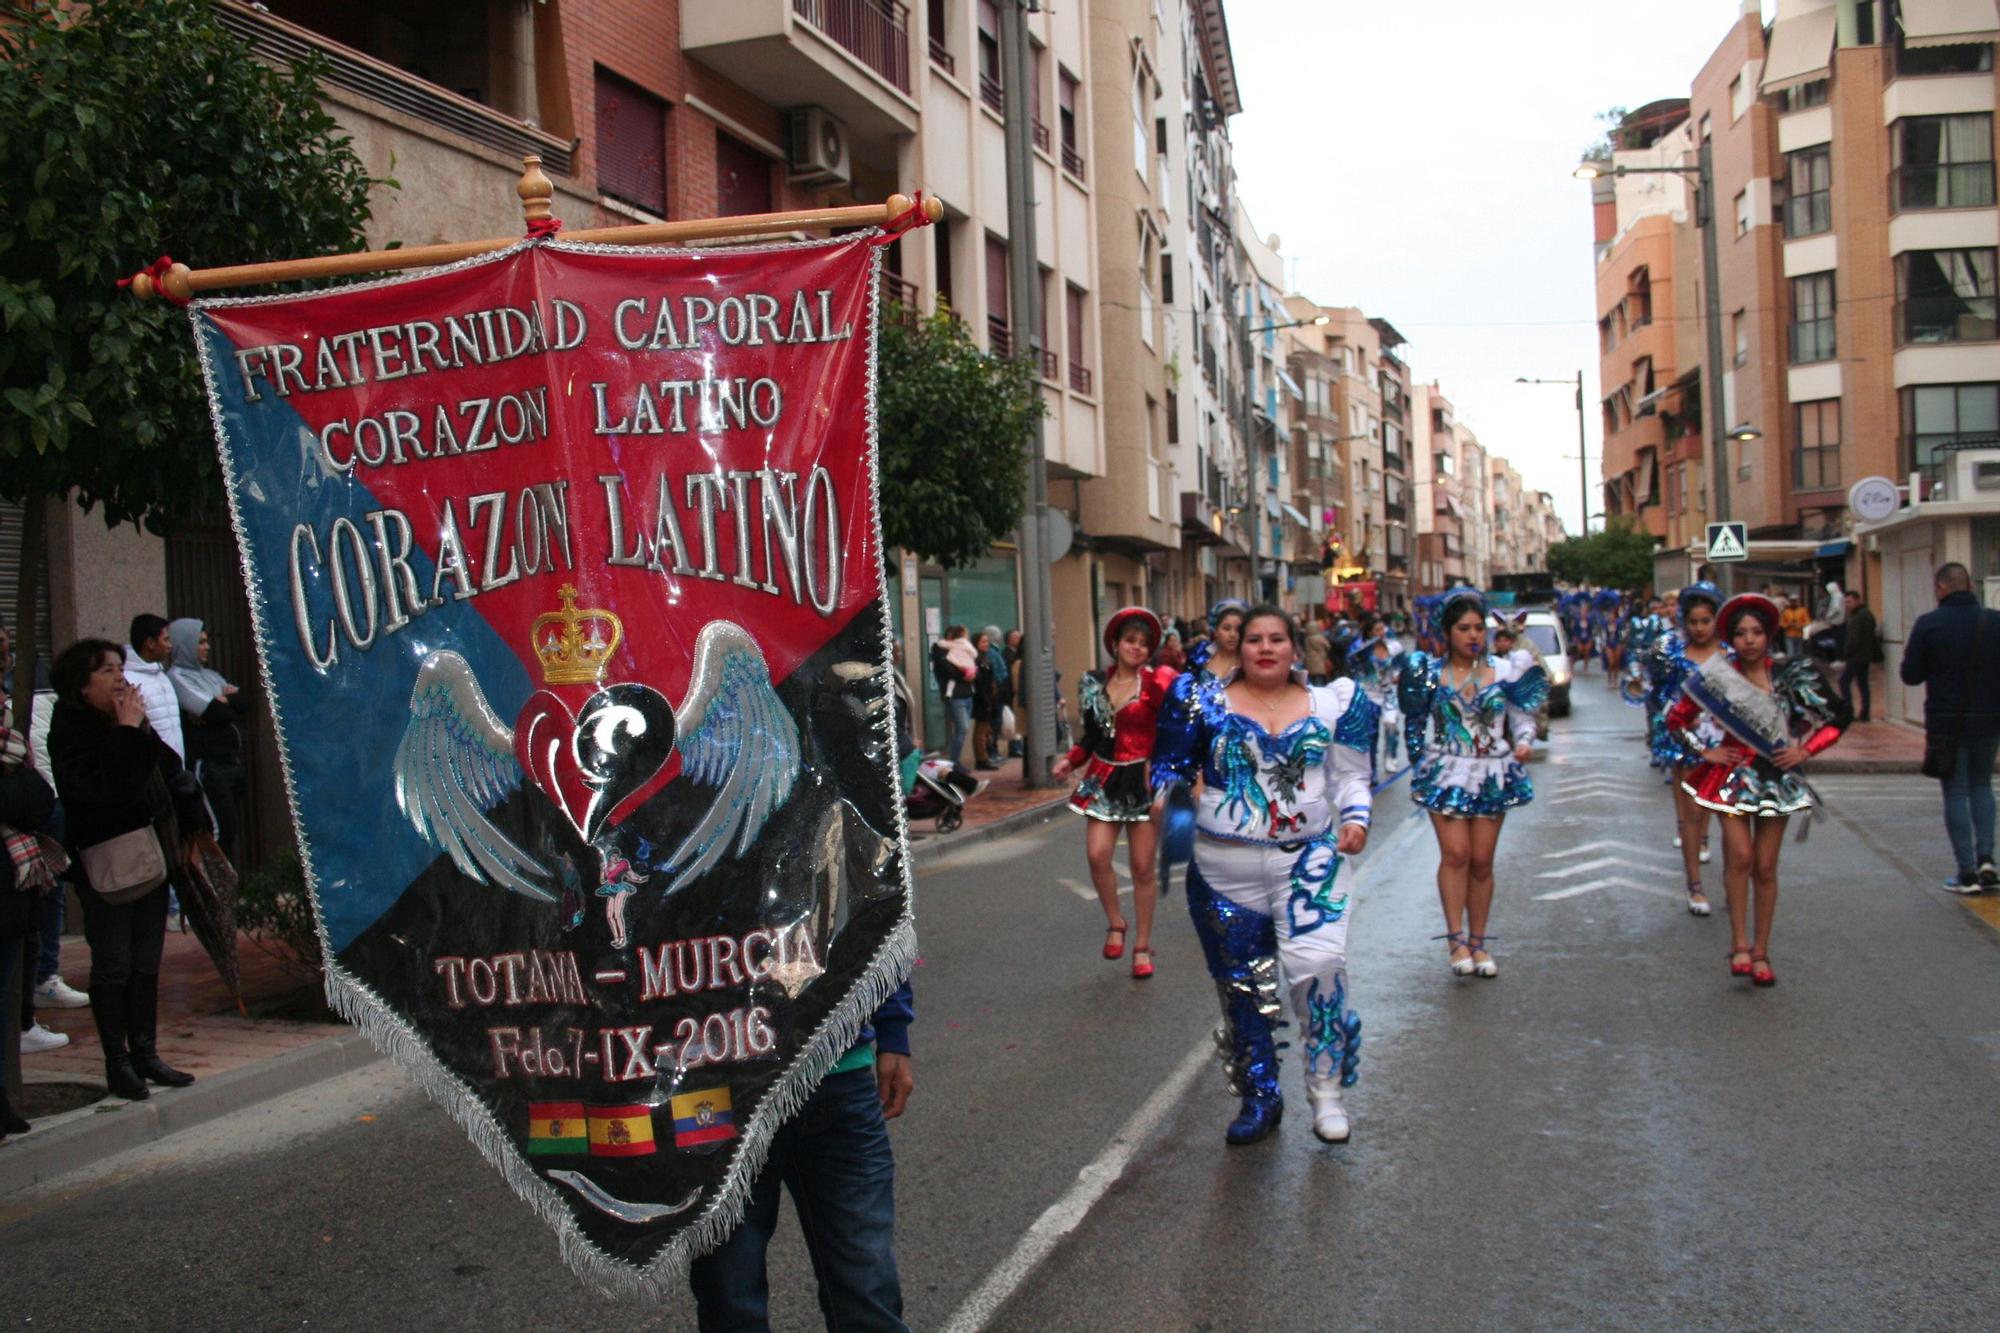 Carnaval en Lorca 2023